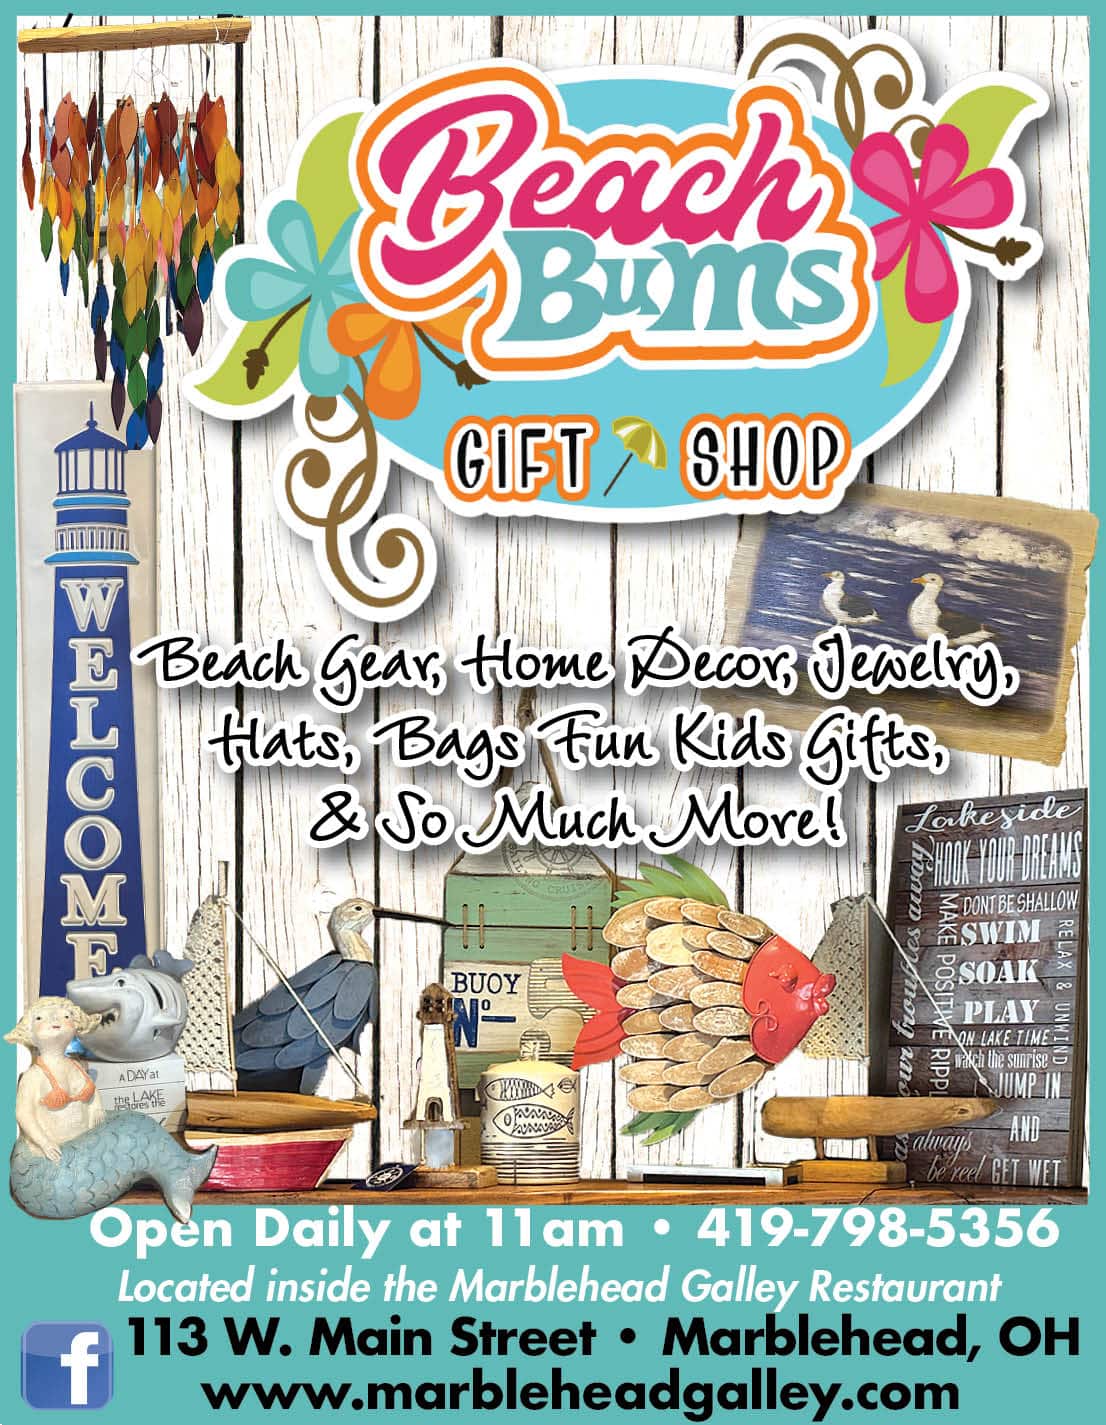 Beach Bums Gift Shop